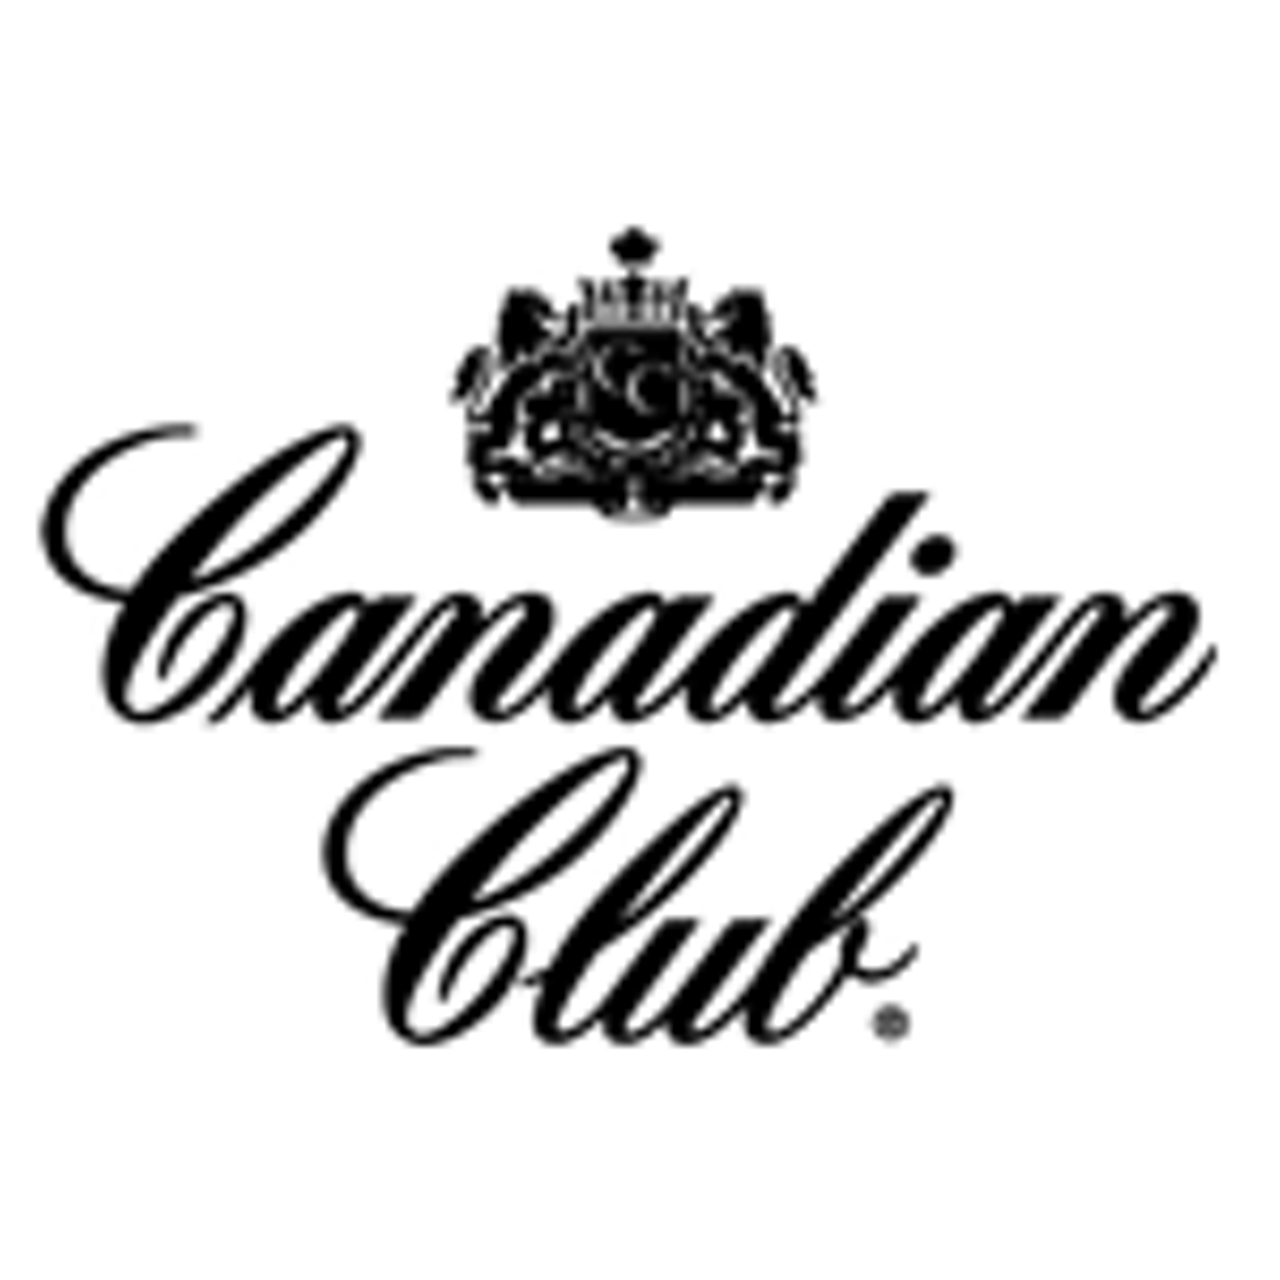 Canadian Club Promo at Firehouse Pub